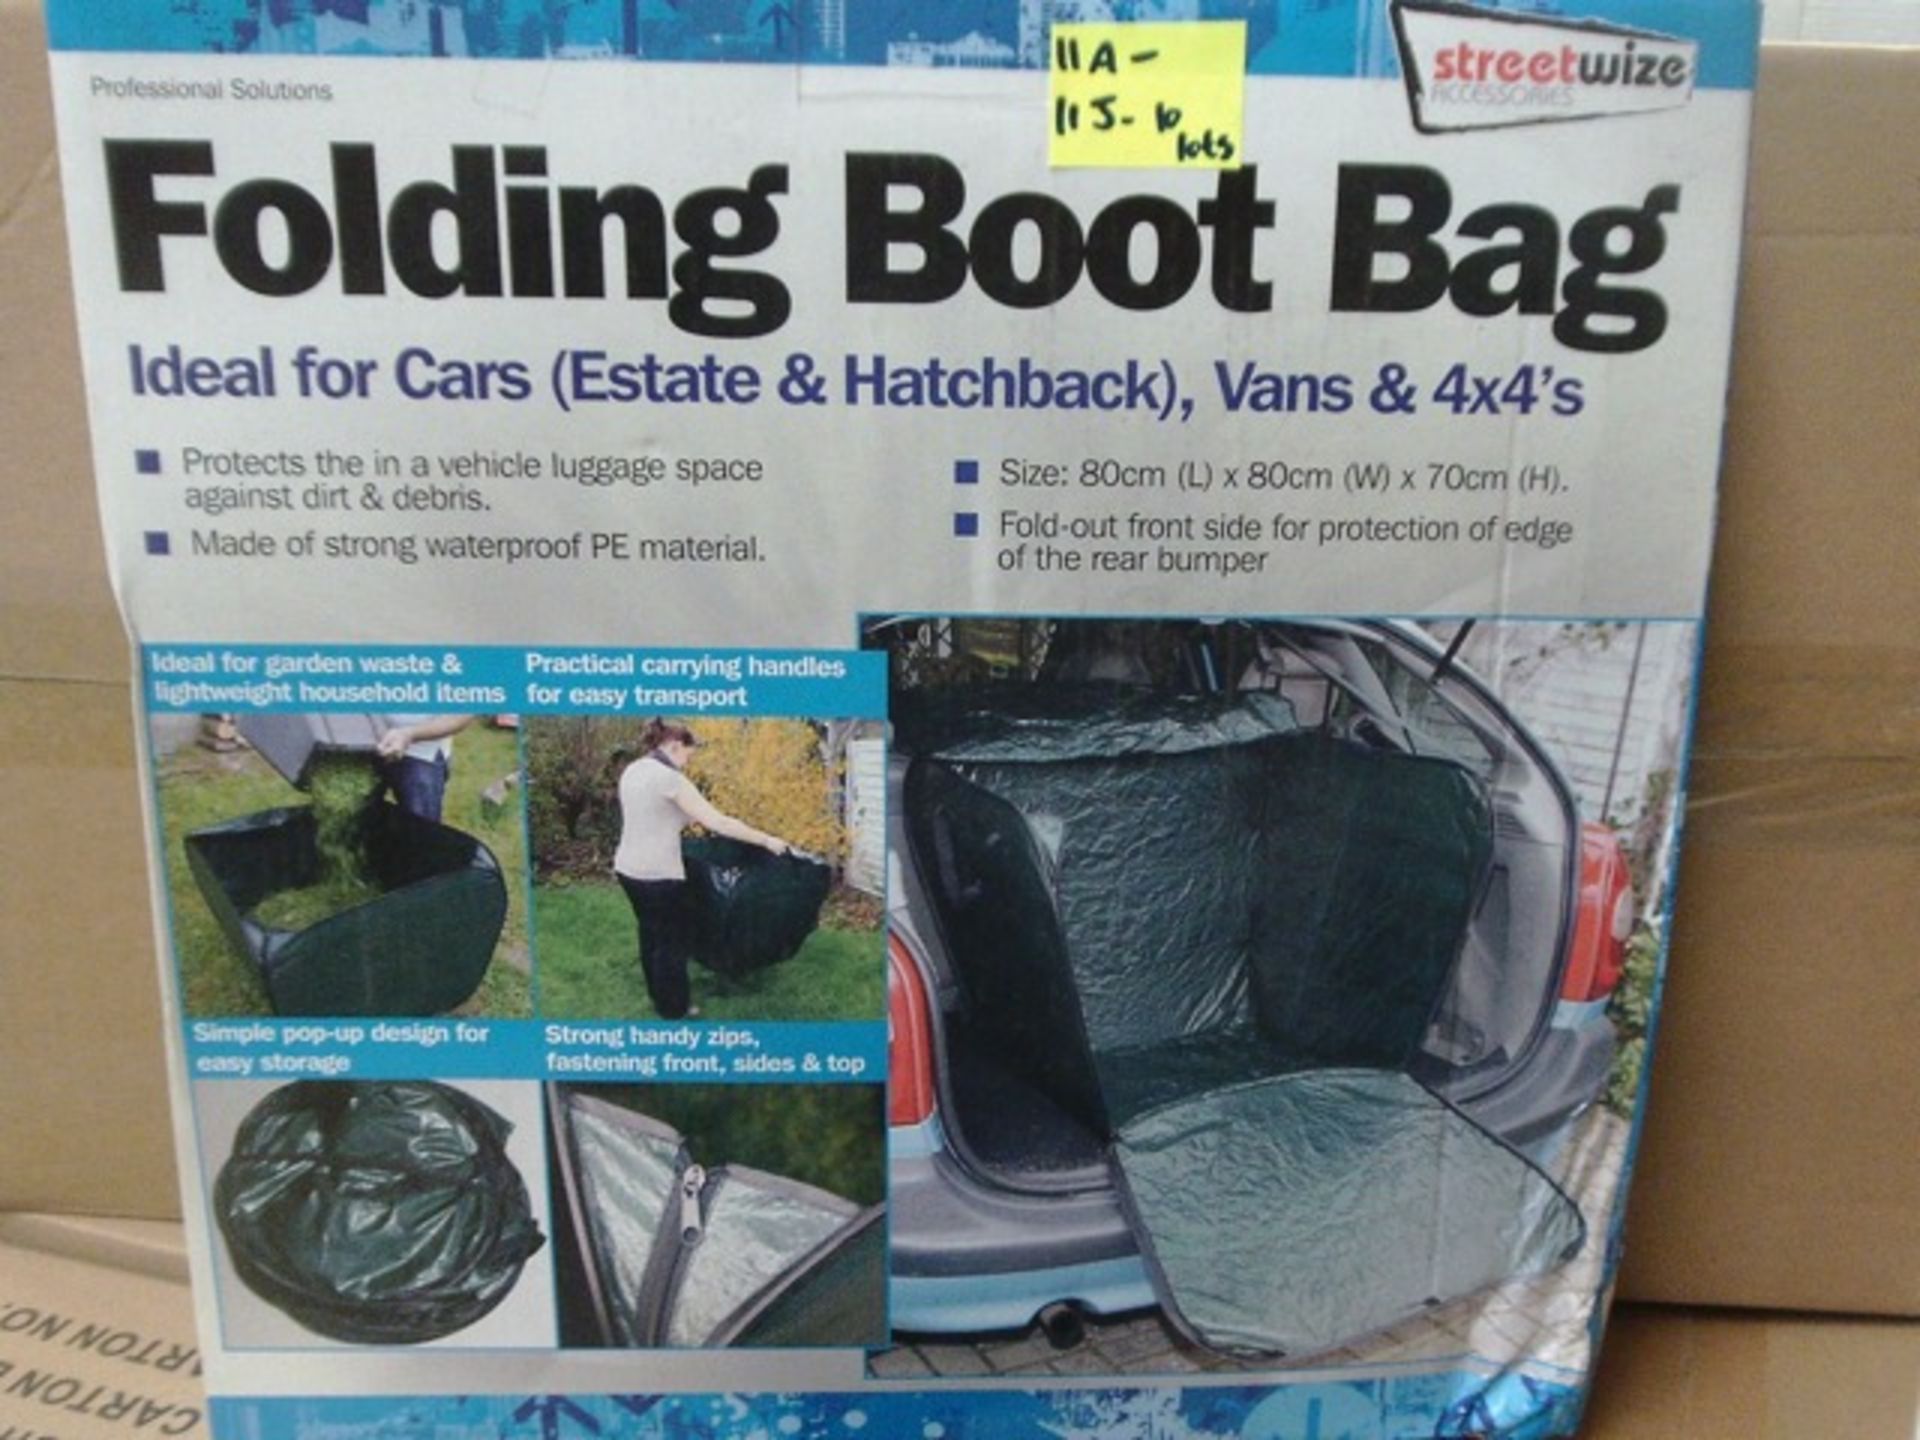 Streetwise - brand new Folding Boot Bag - rrp £12.99.